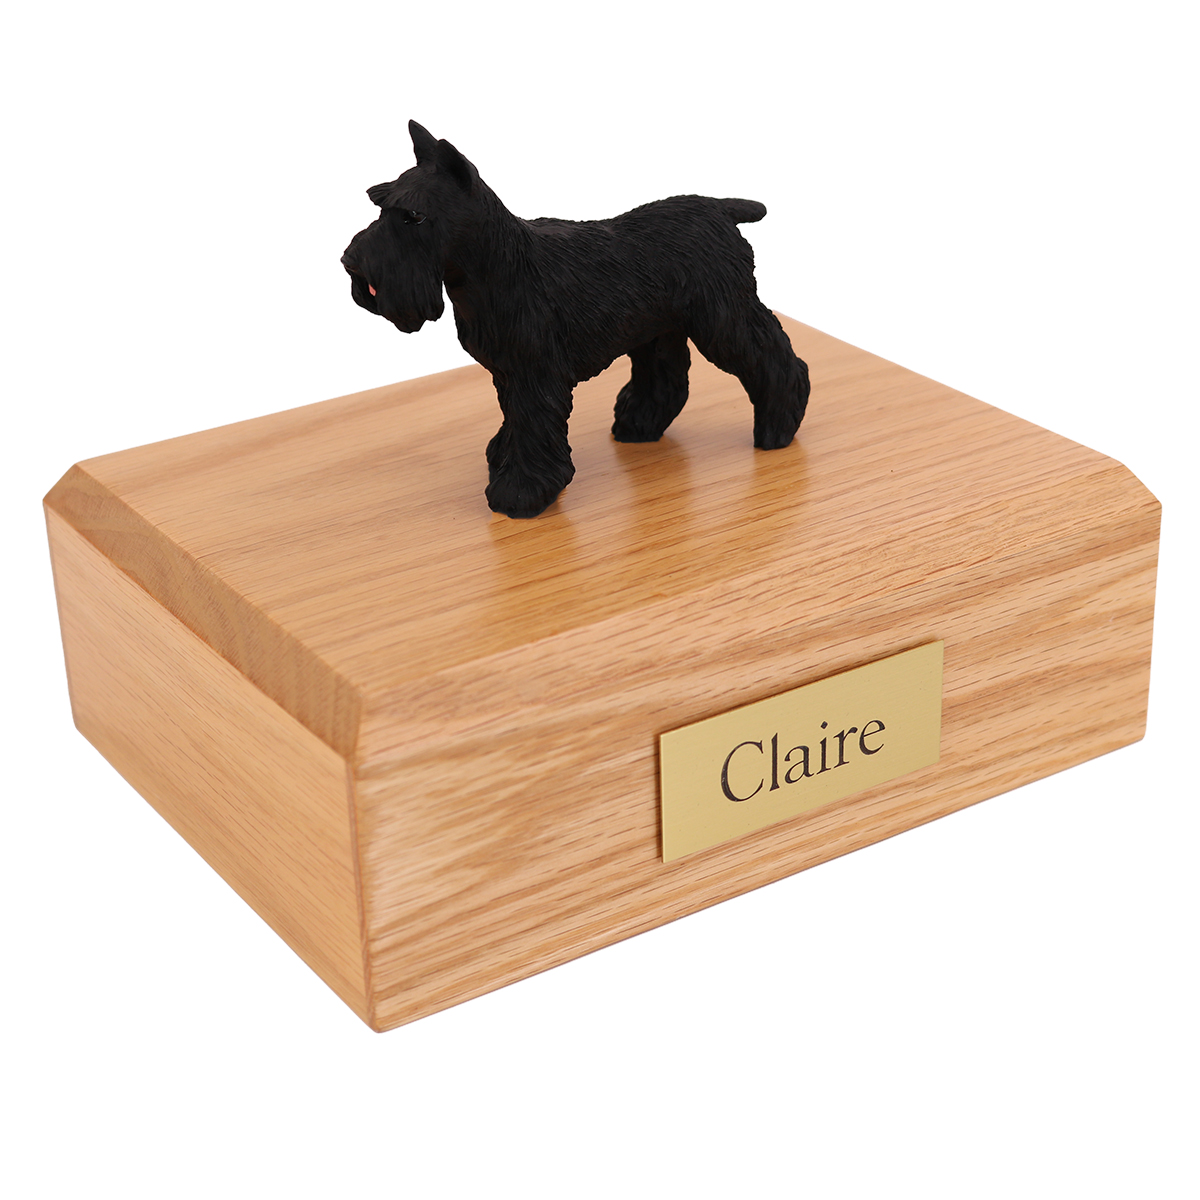 Dog, Schnauzer, Black - Figurine Urn